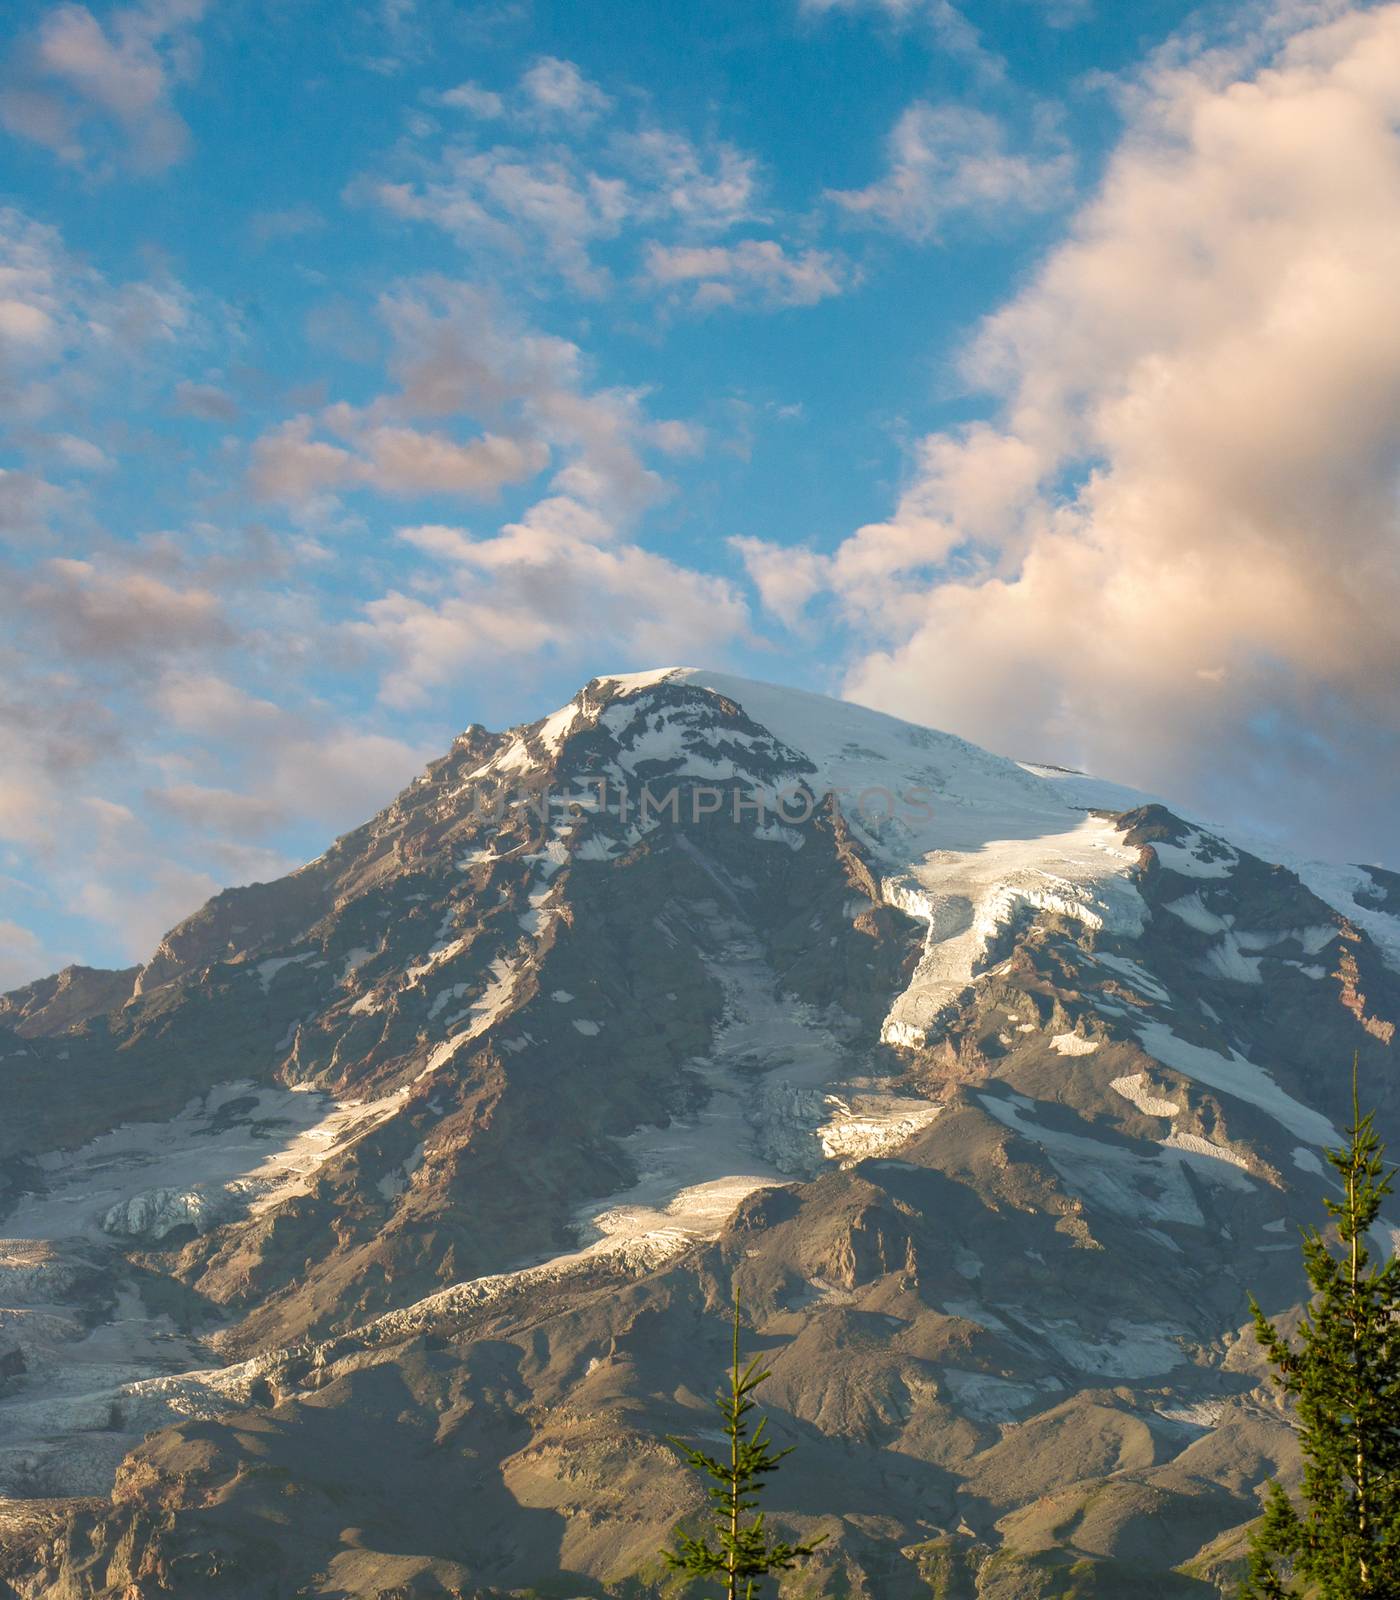 The Mount Rainier, Washington.